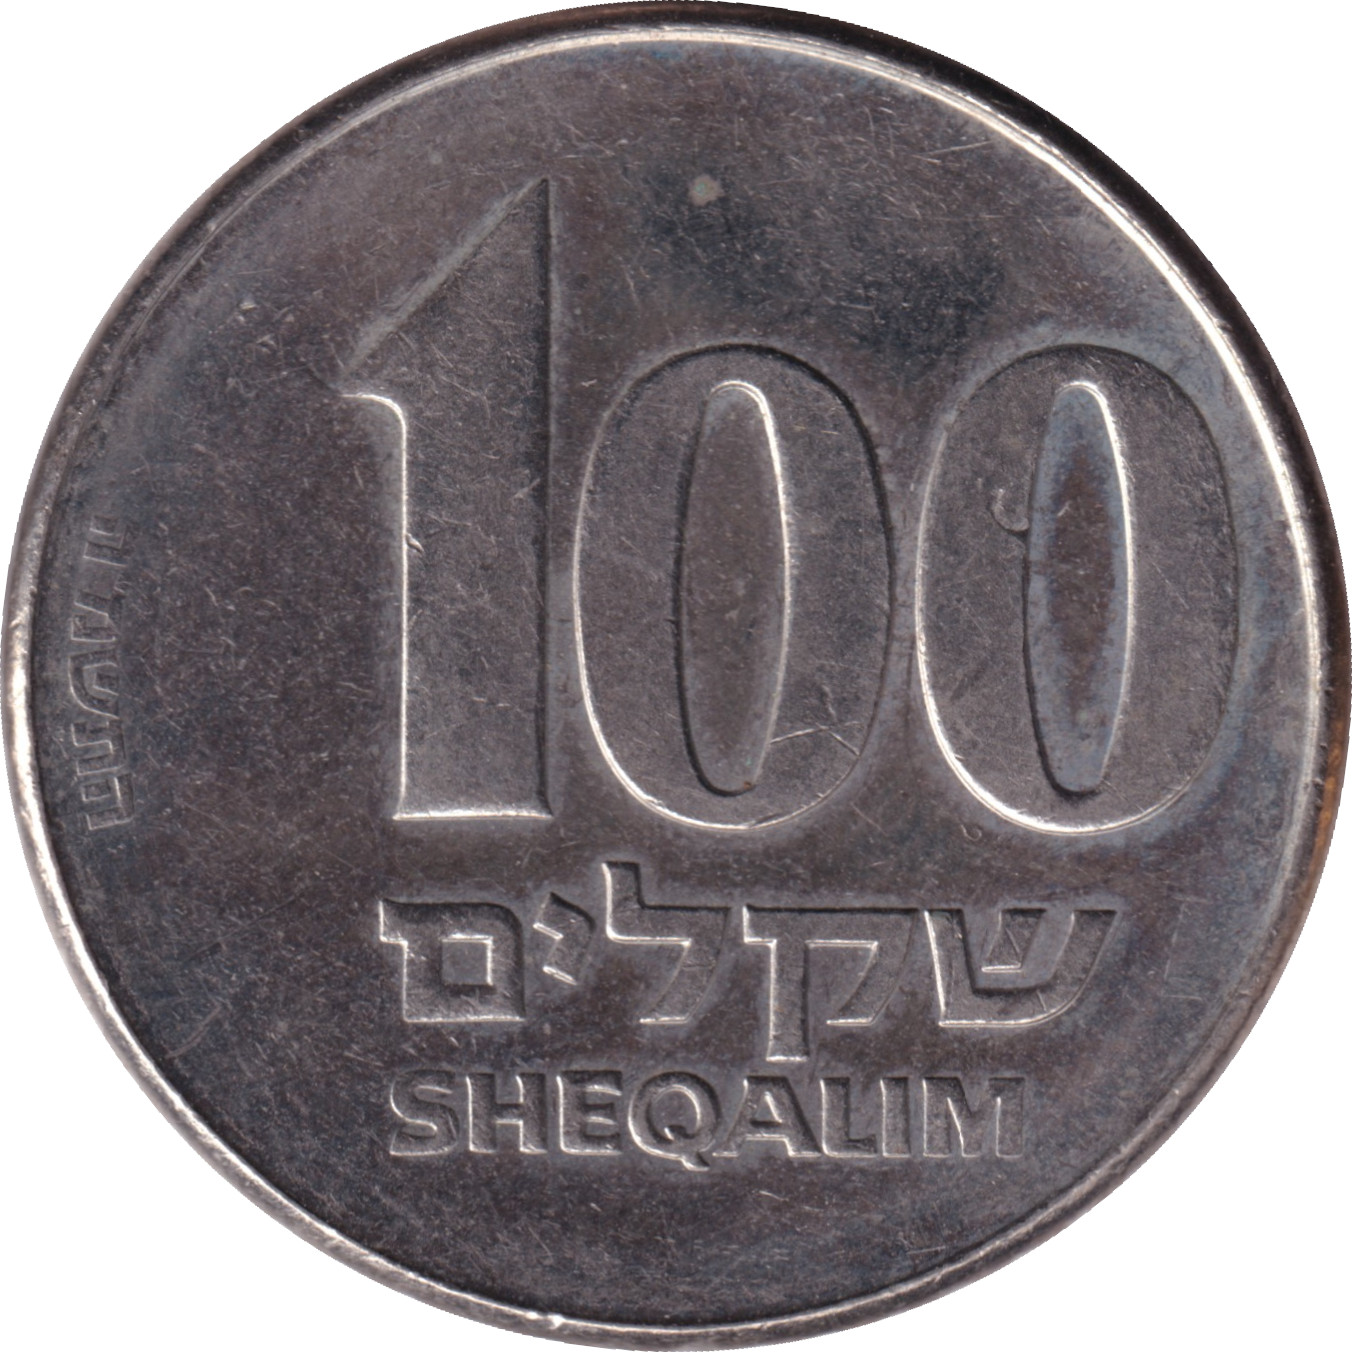 100 sheqalim - Israel land